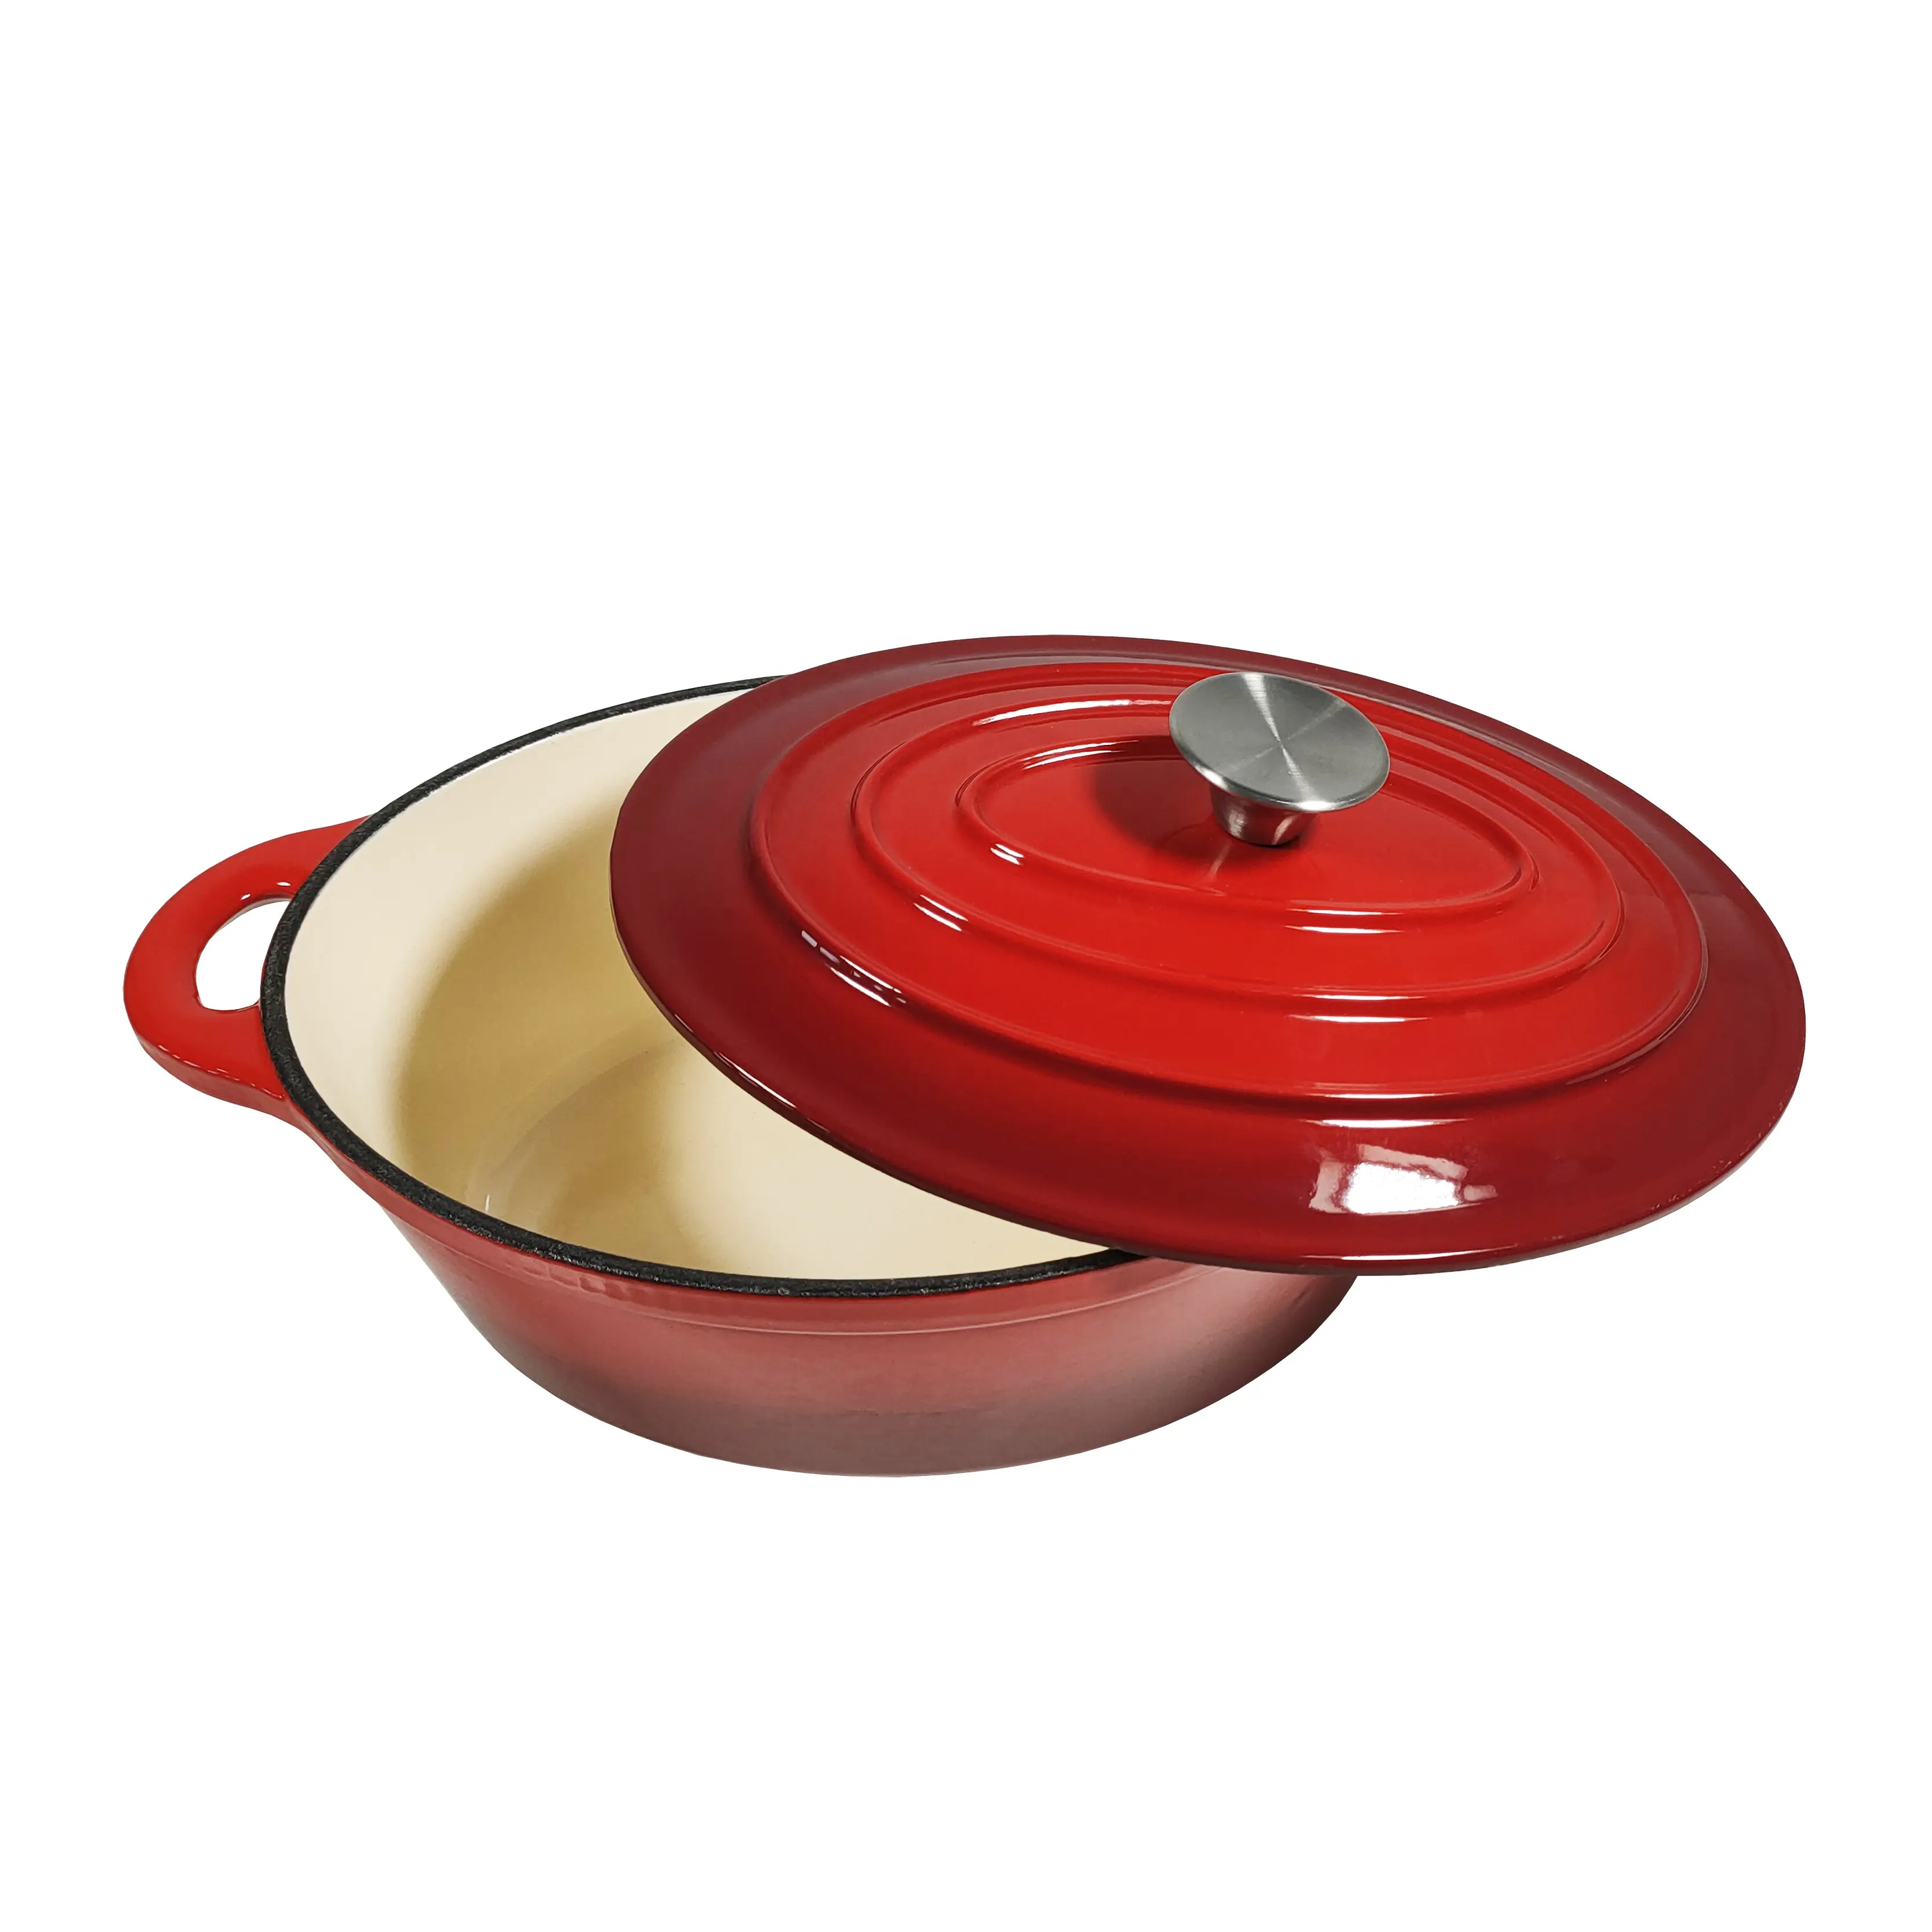 Enamel Cast Iron Cook Ware Hot Sale Healthy Eco Friendly Preseasoned Oval Enamel Cast Iron Cookware